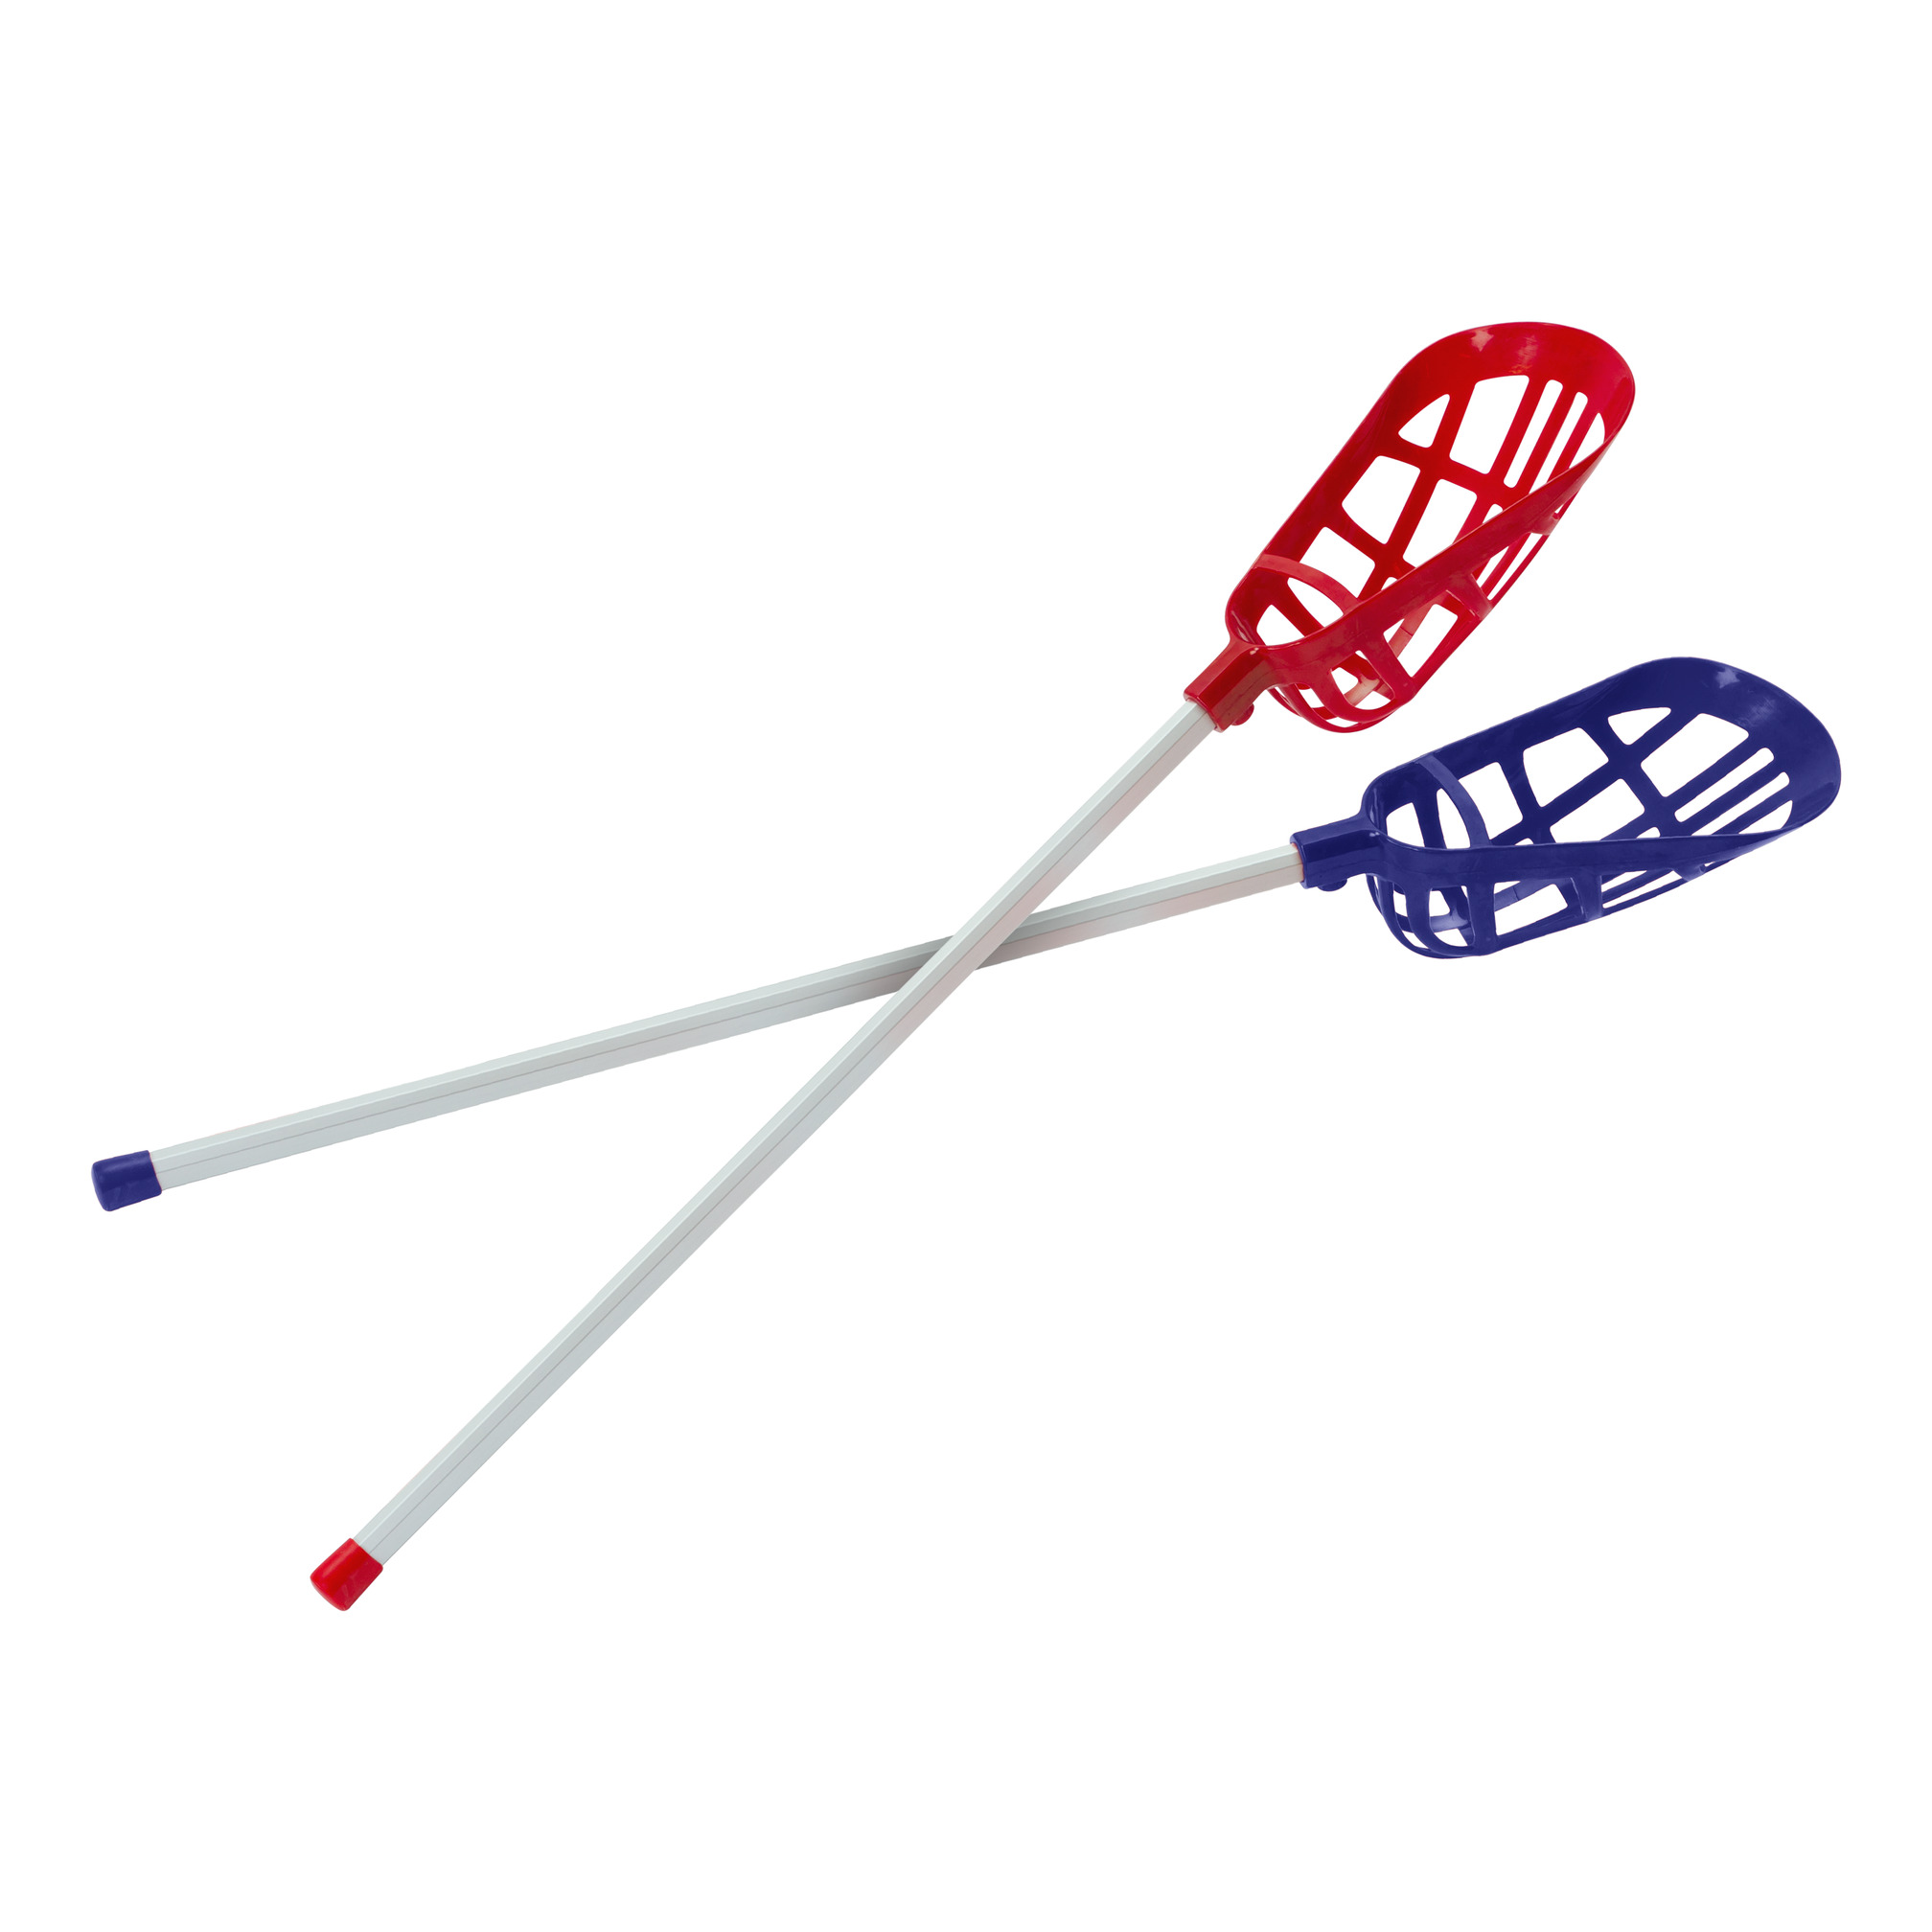 Lacrosse stick, red